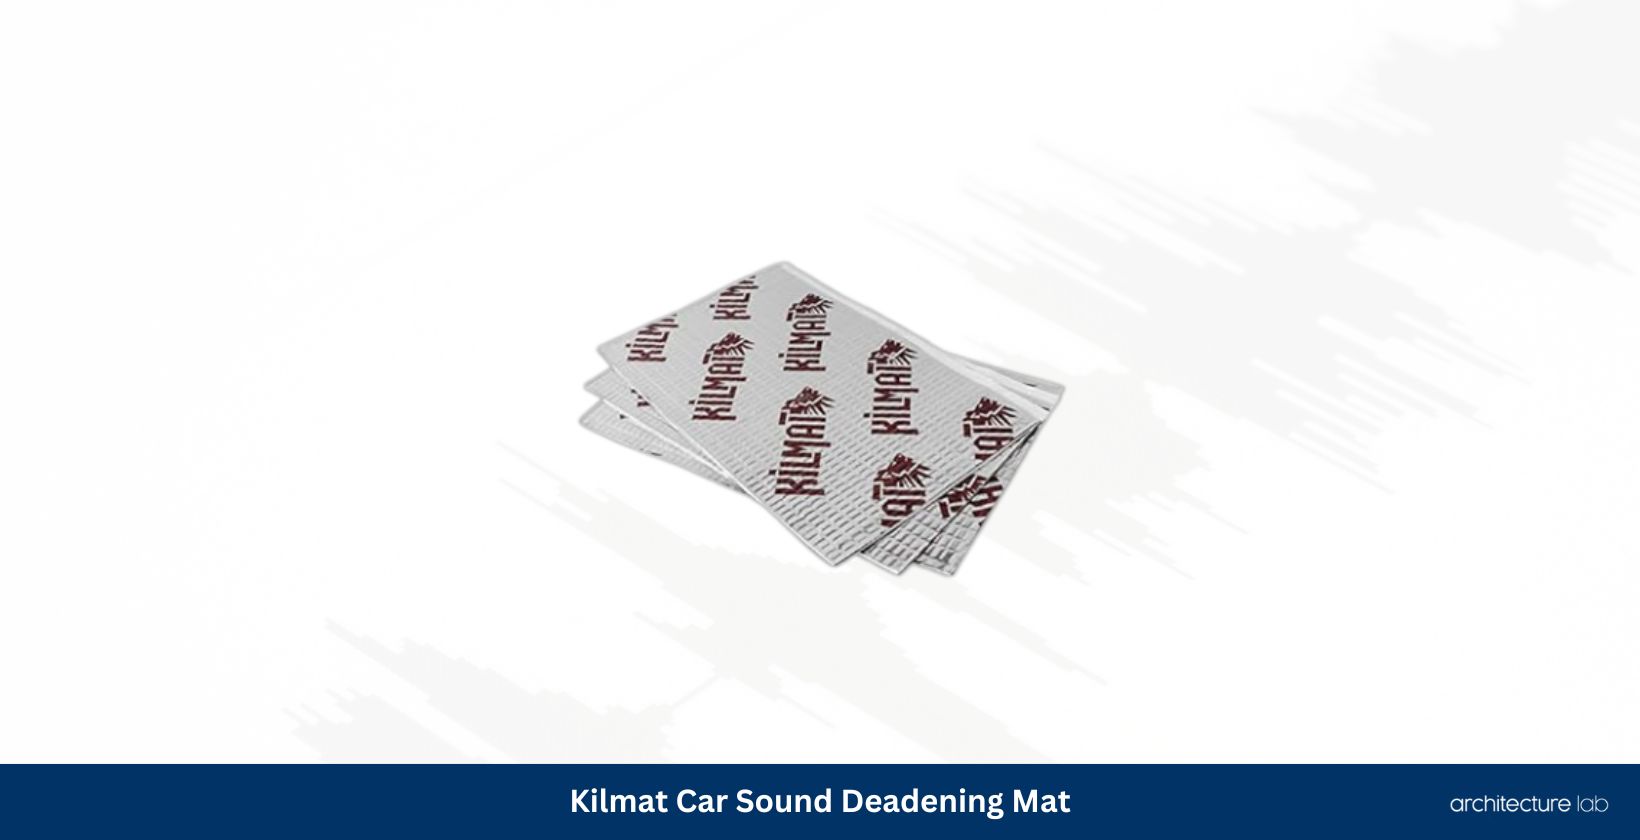 Kilmat car sound deadening mat